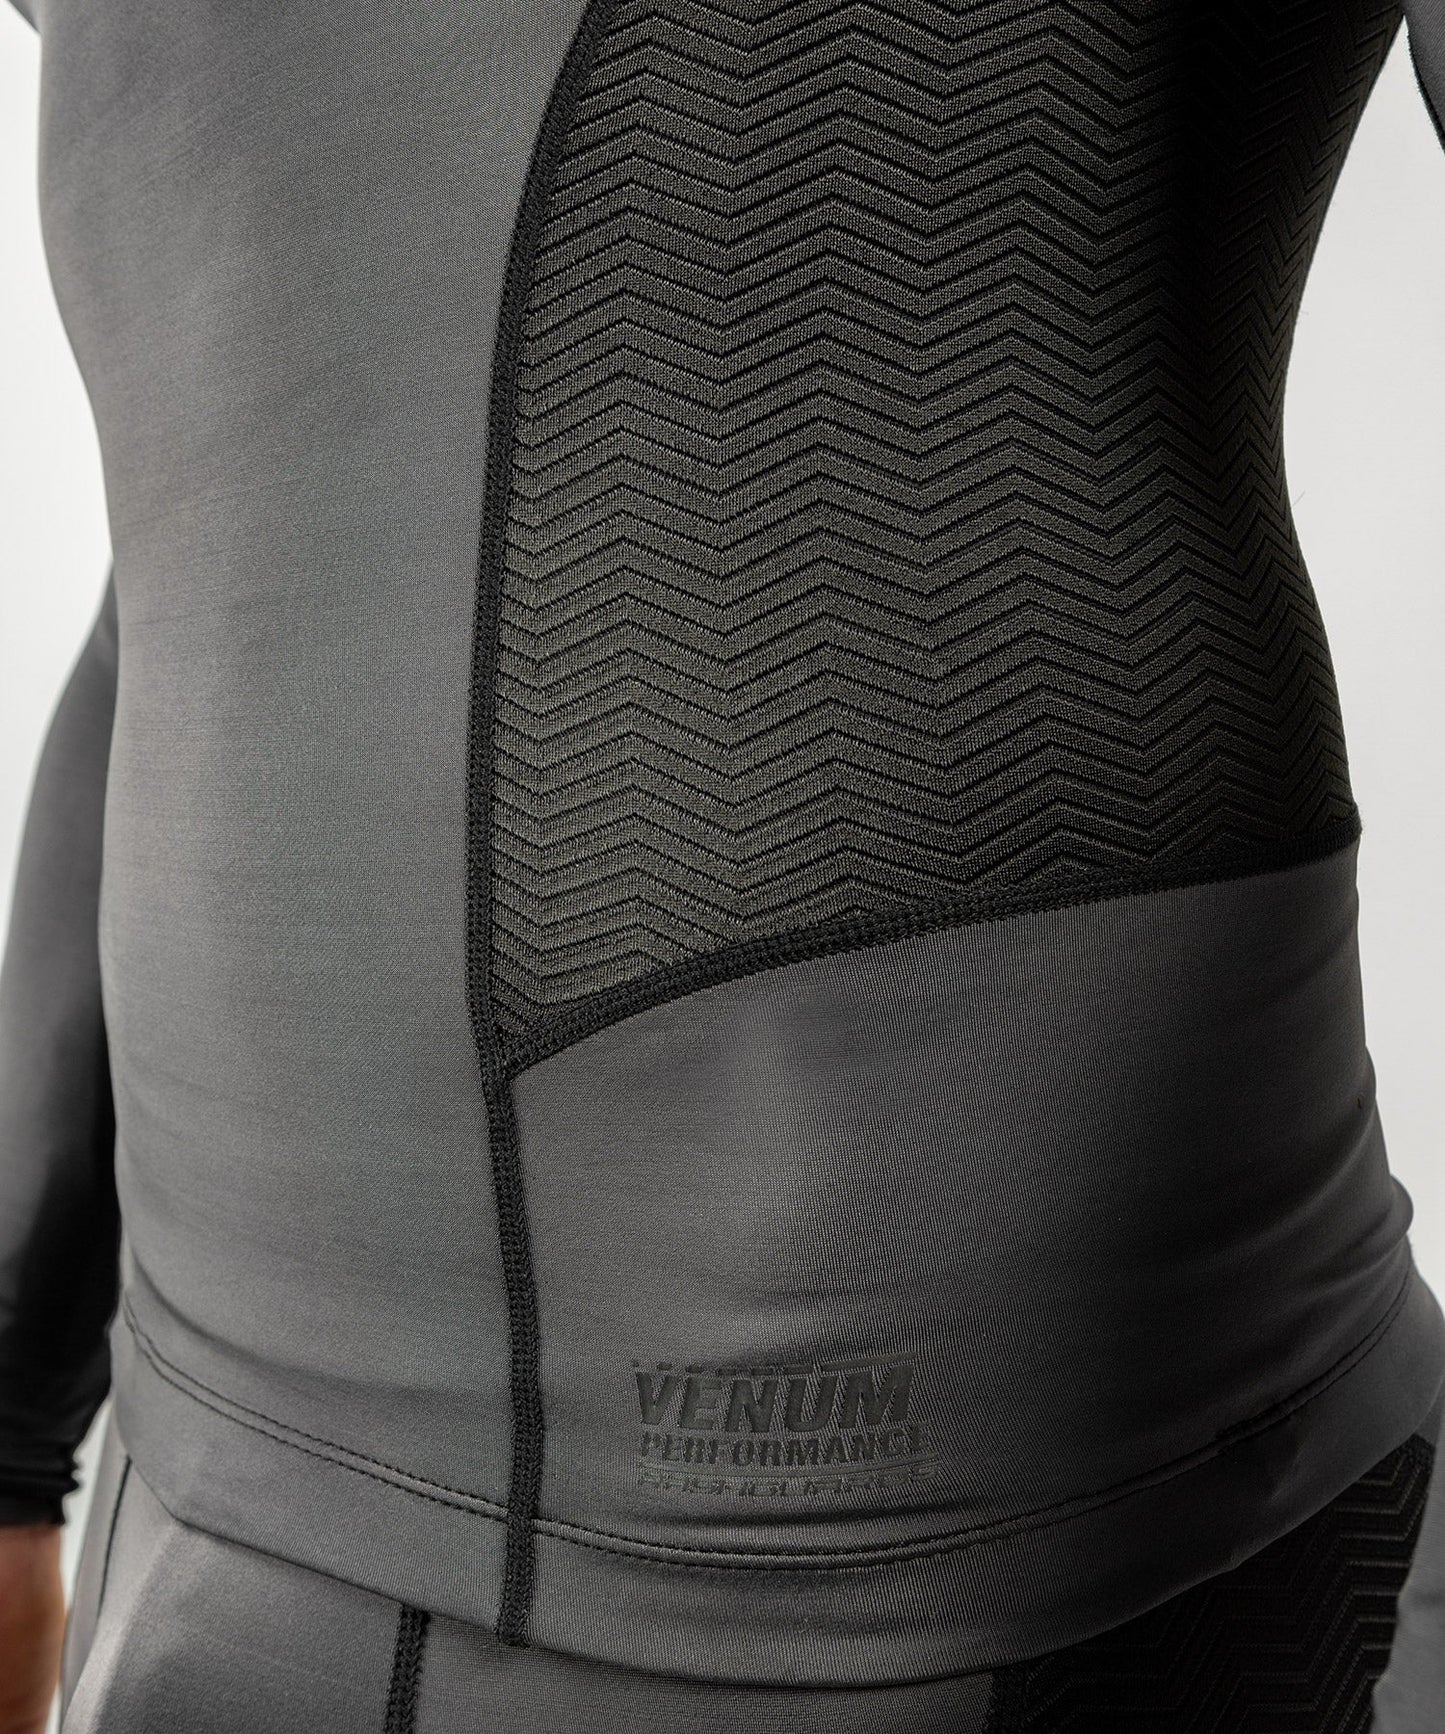 Venum G-Fit Rashguard - Long Sleeves - Grey/Black